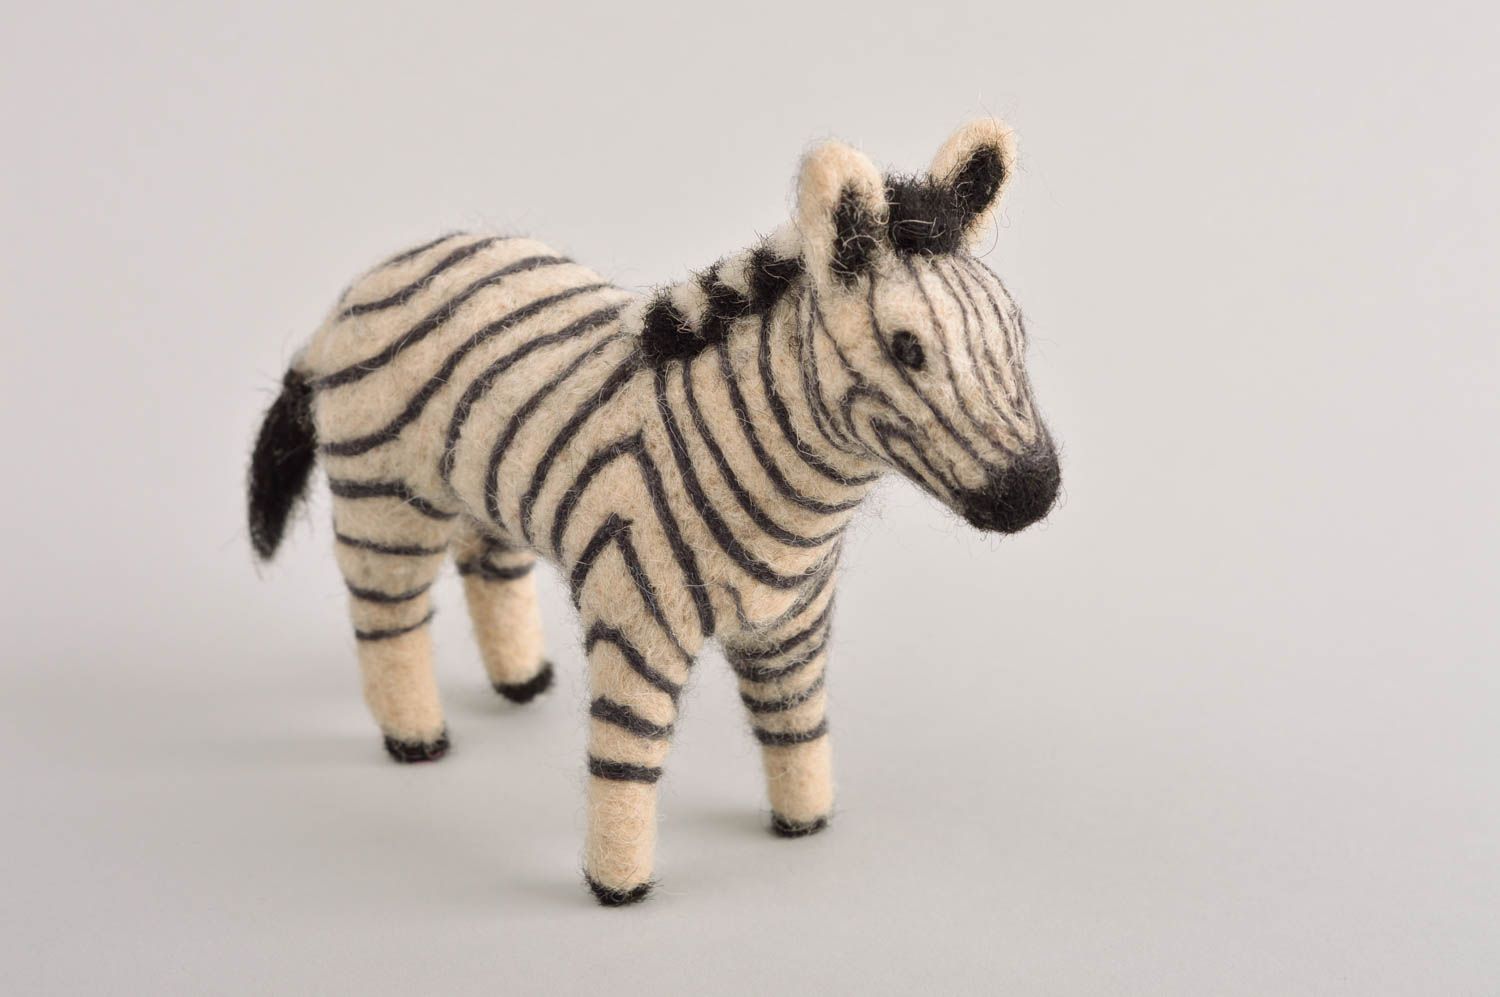 Handmade toy designer toy for baby nursery decor ideas woolen animal toy photo 2